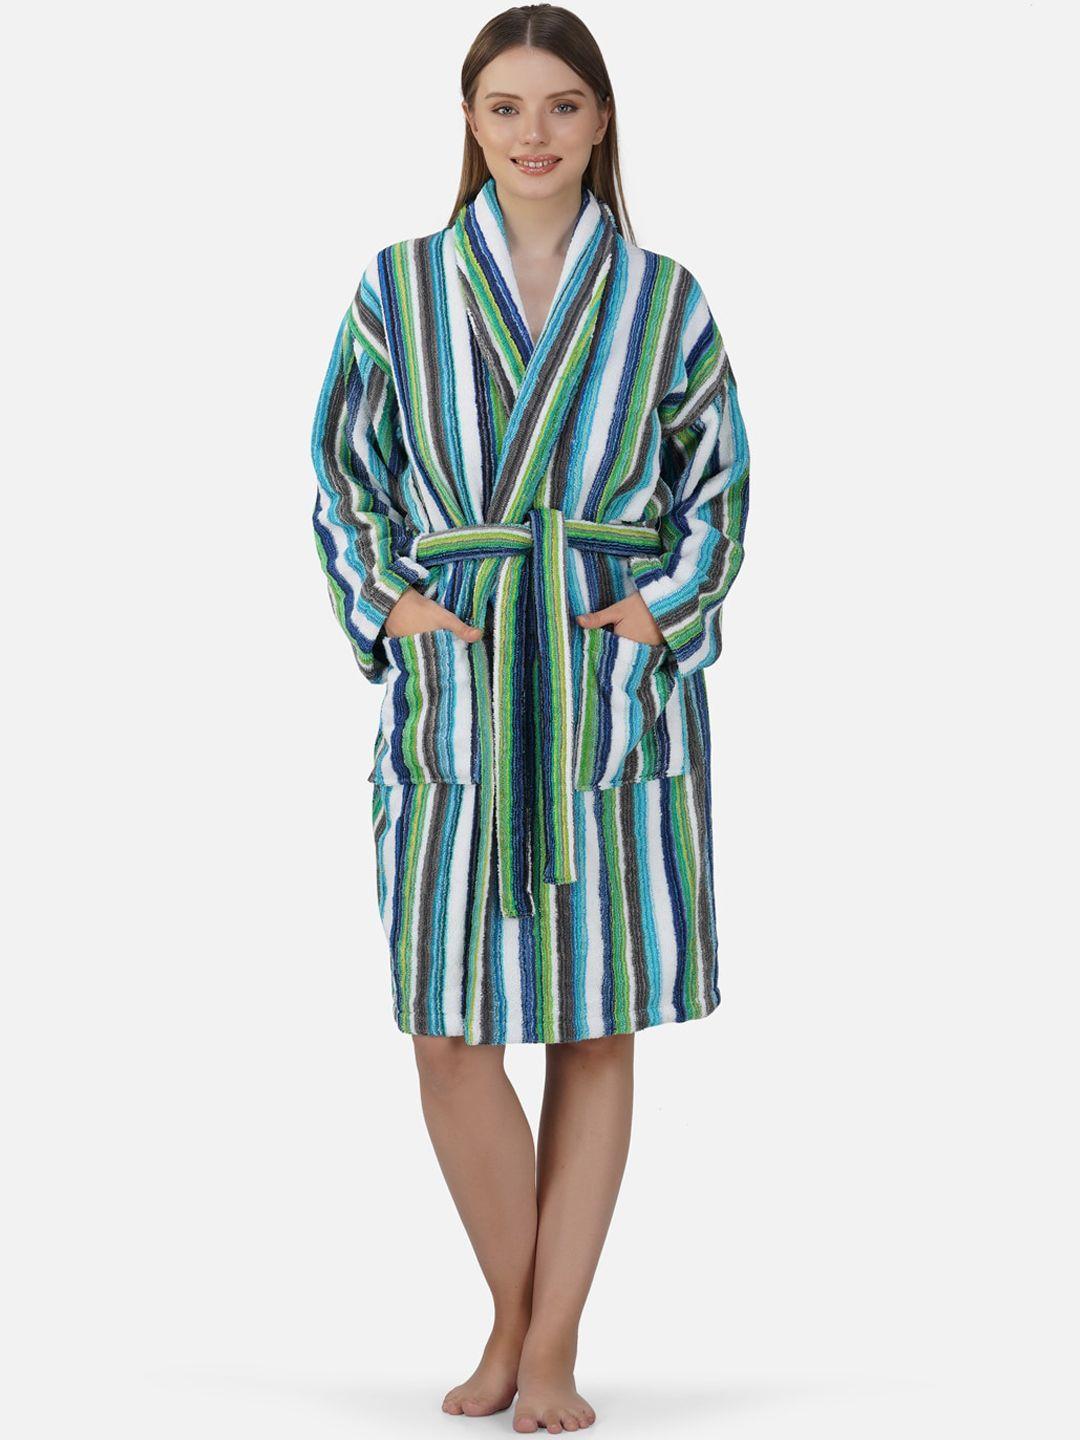 rangoli pure cotton bath robe